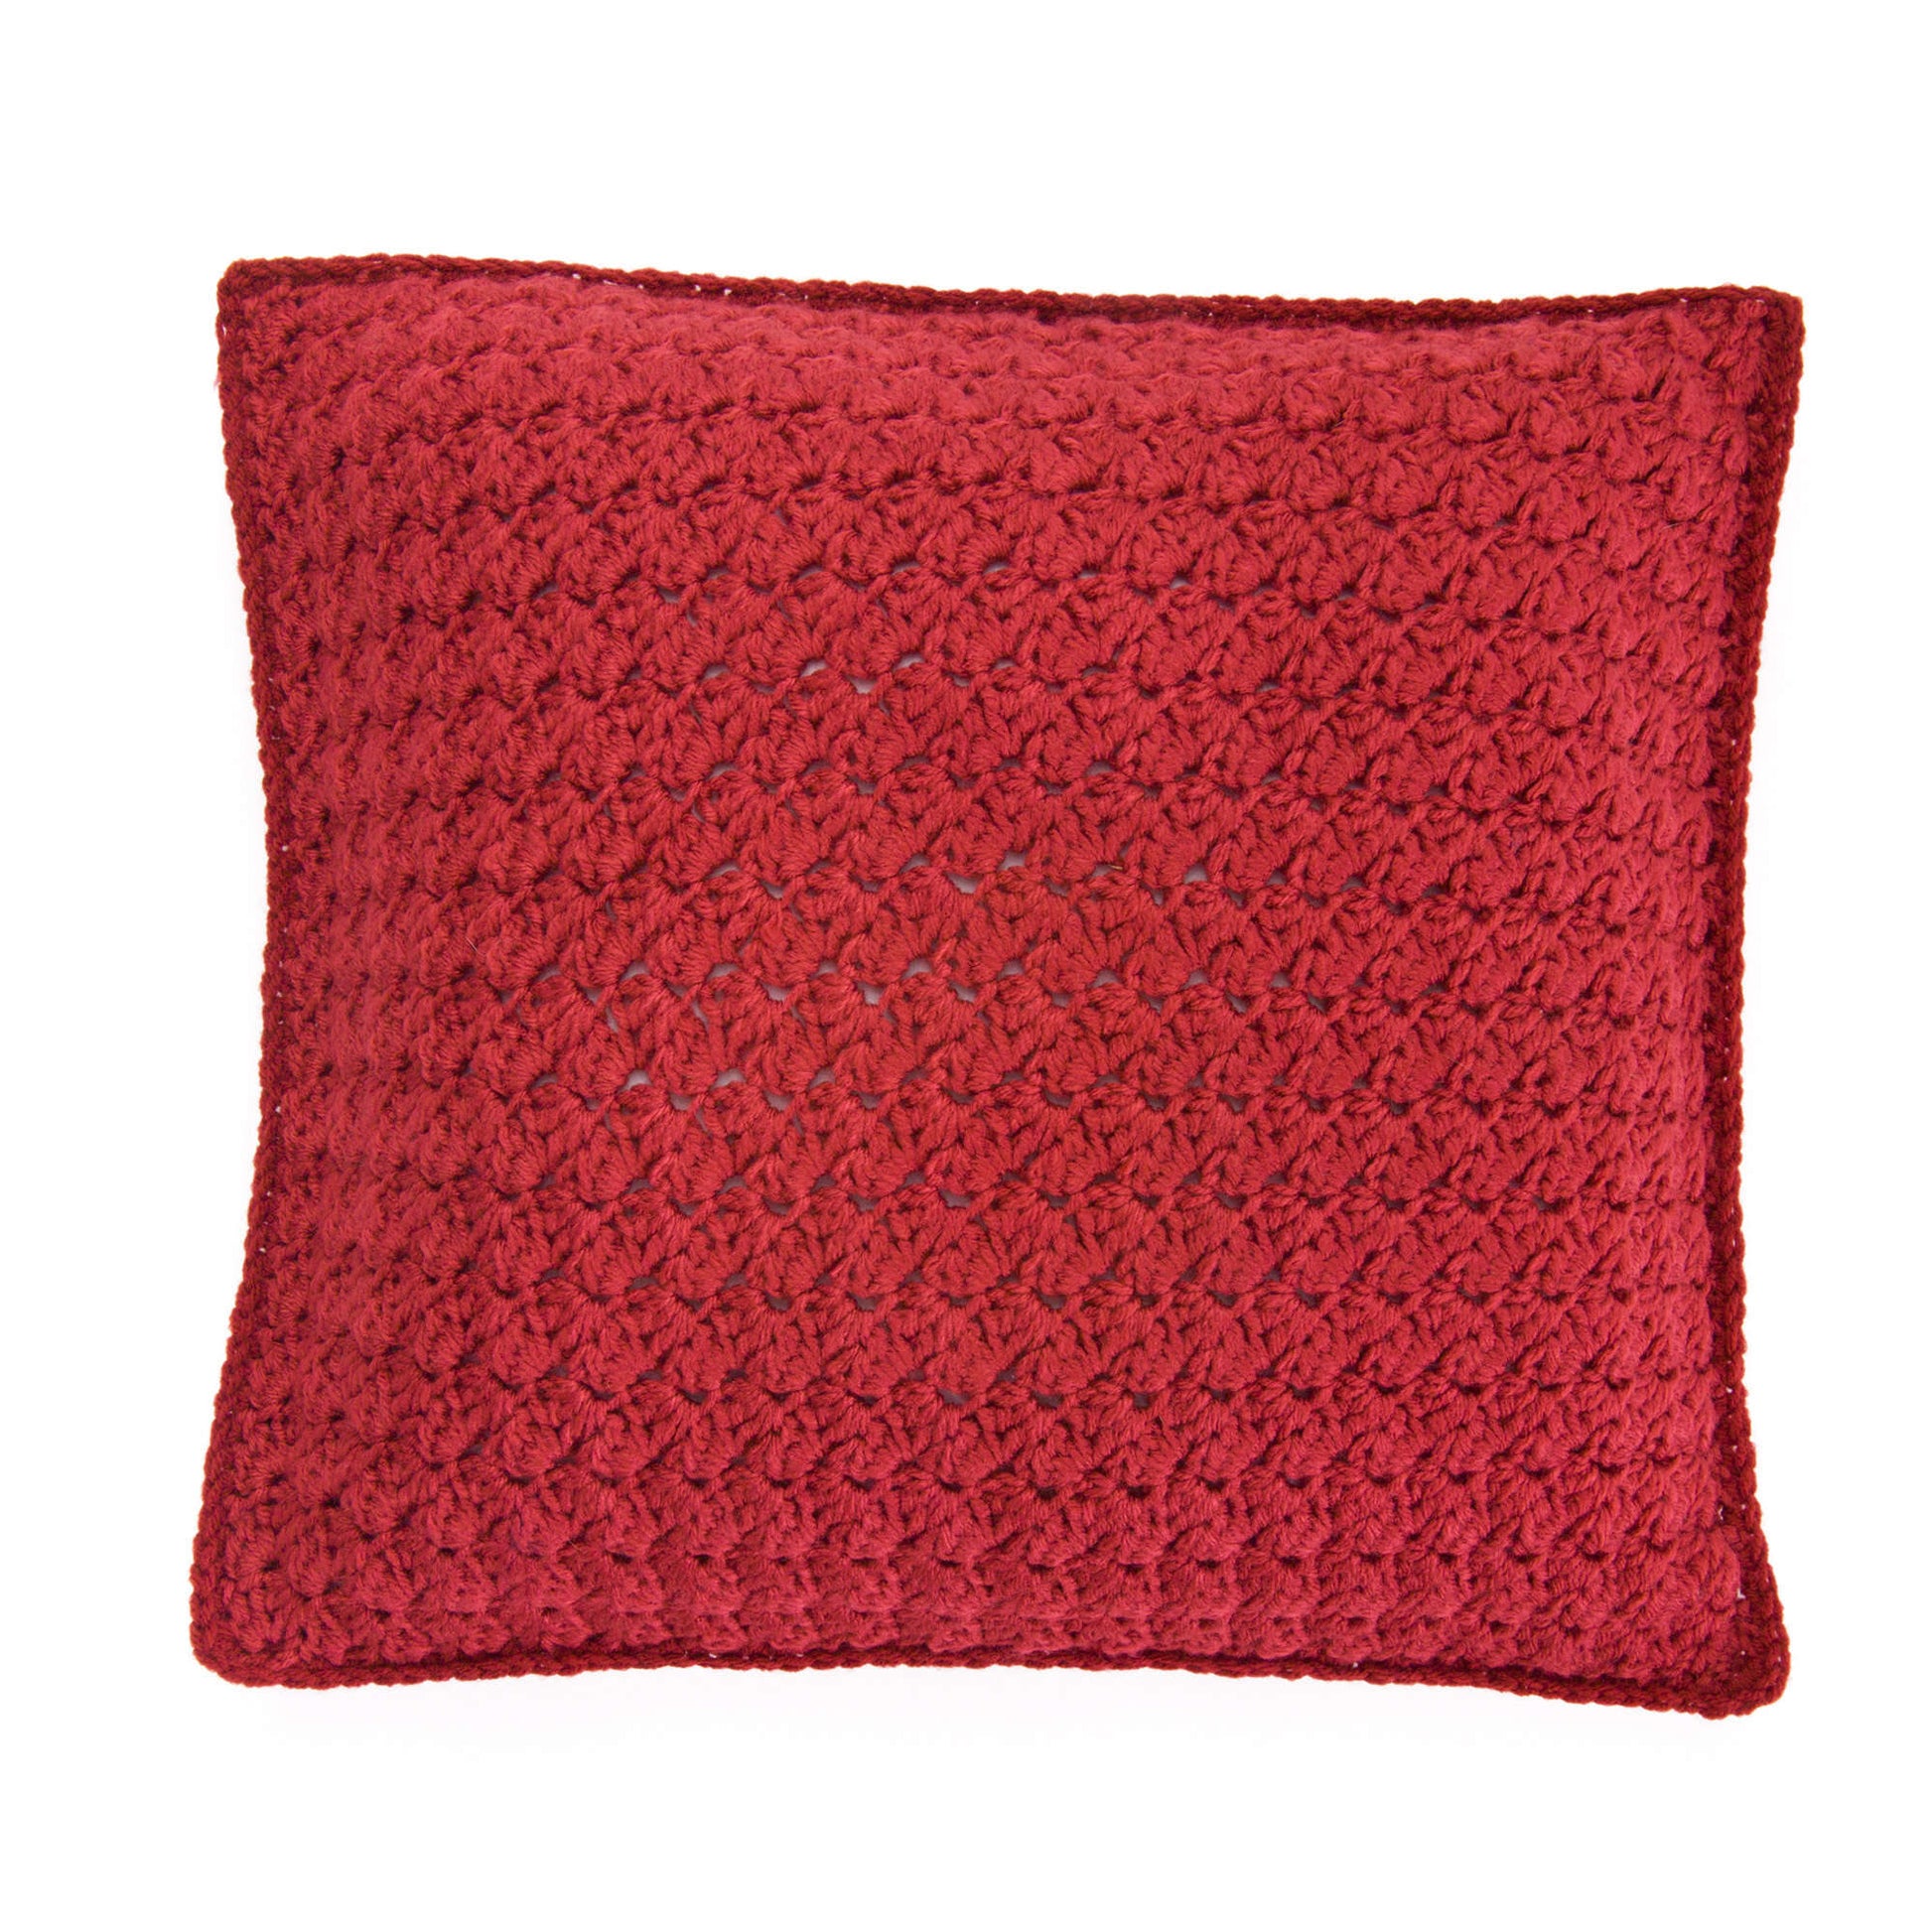 Free Red Heart Textured Pillow Trio Crochet Pattern